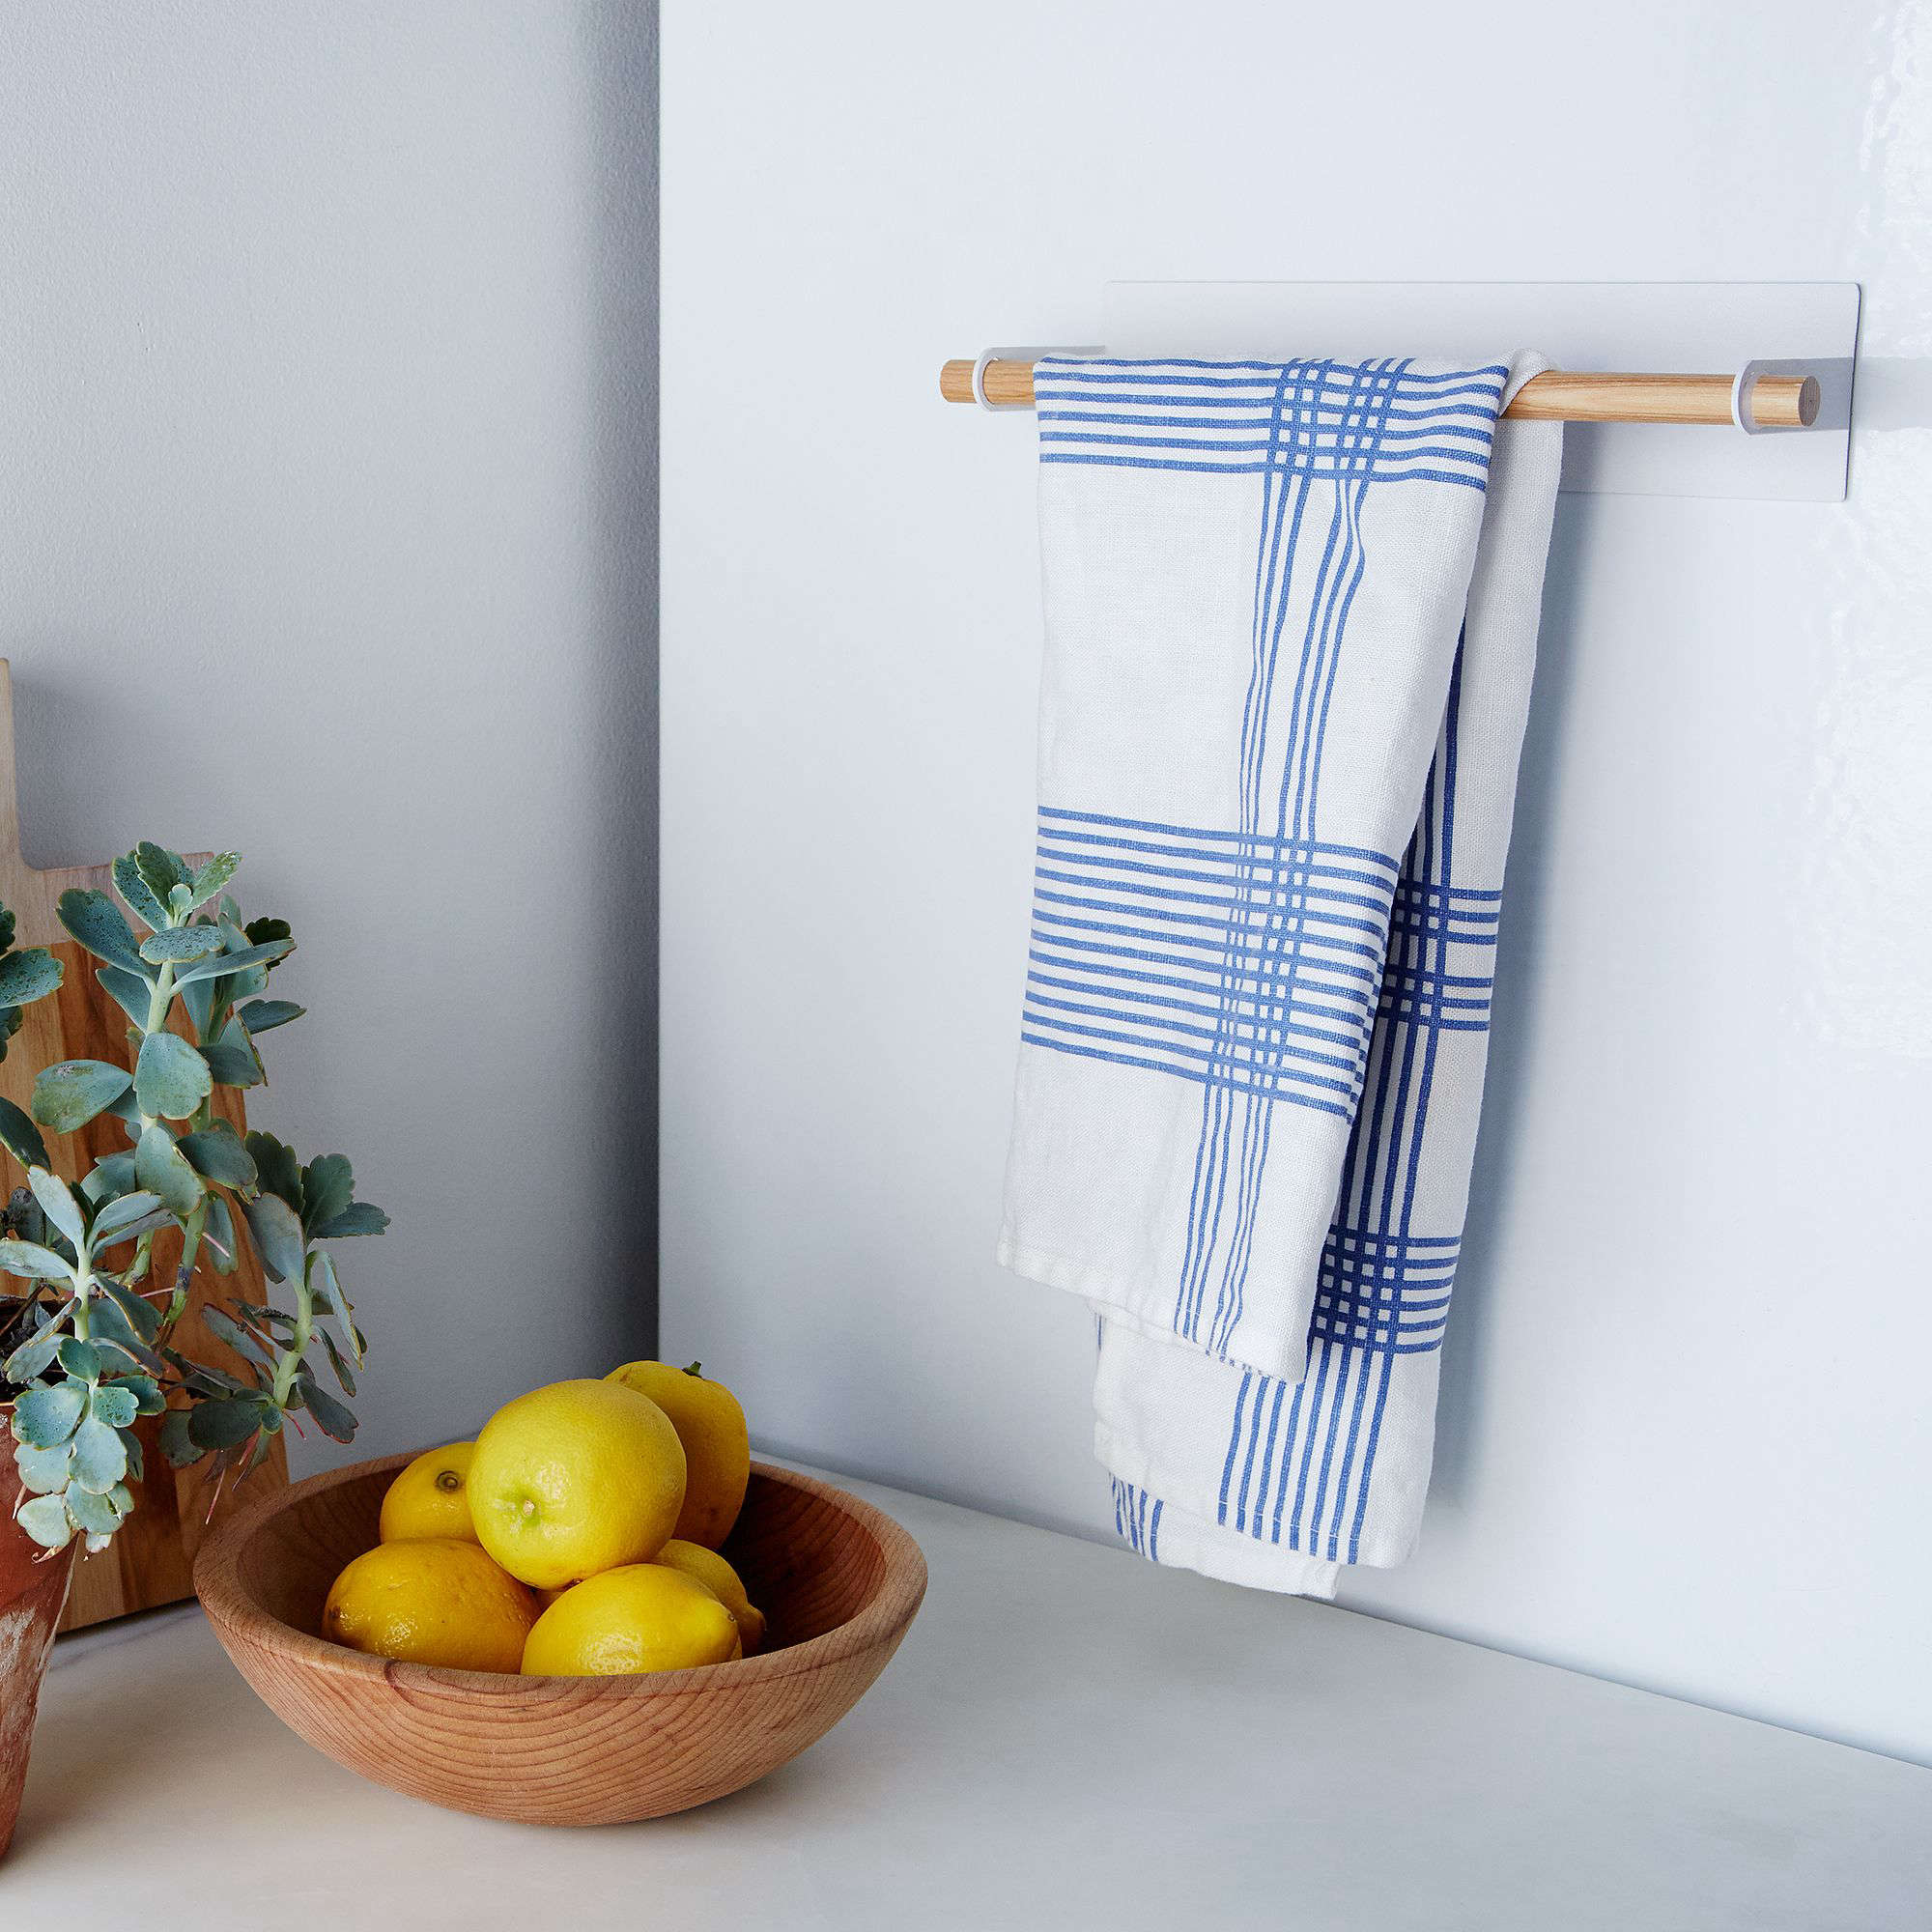 https://www.remodelista.com/wp-content/uploads/2018/02/yamazaki-magnetic-kitchen-towel-holder.jpg